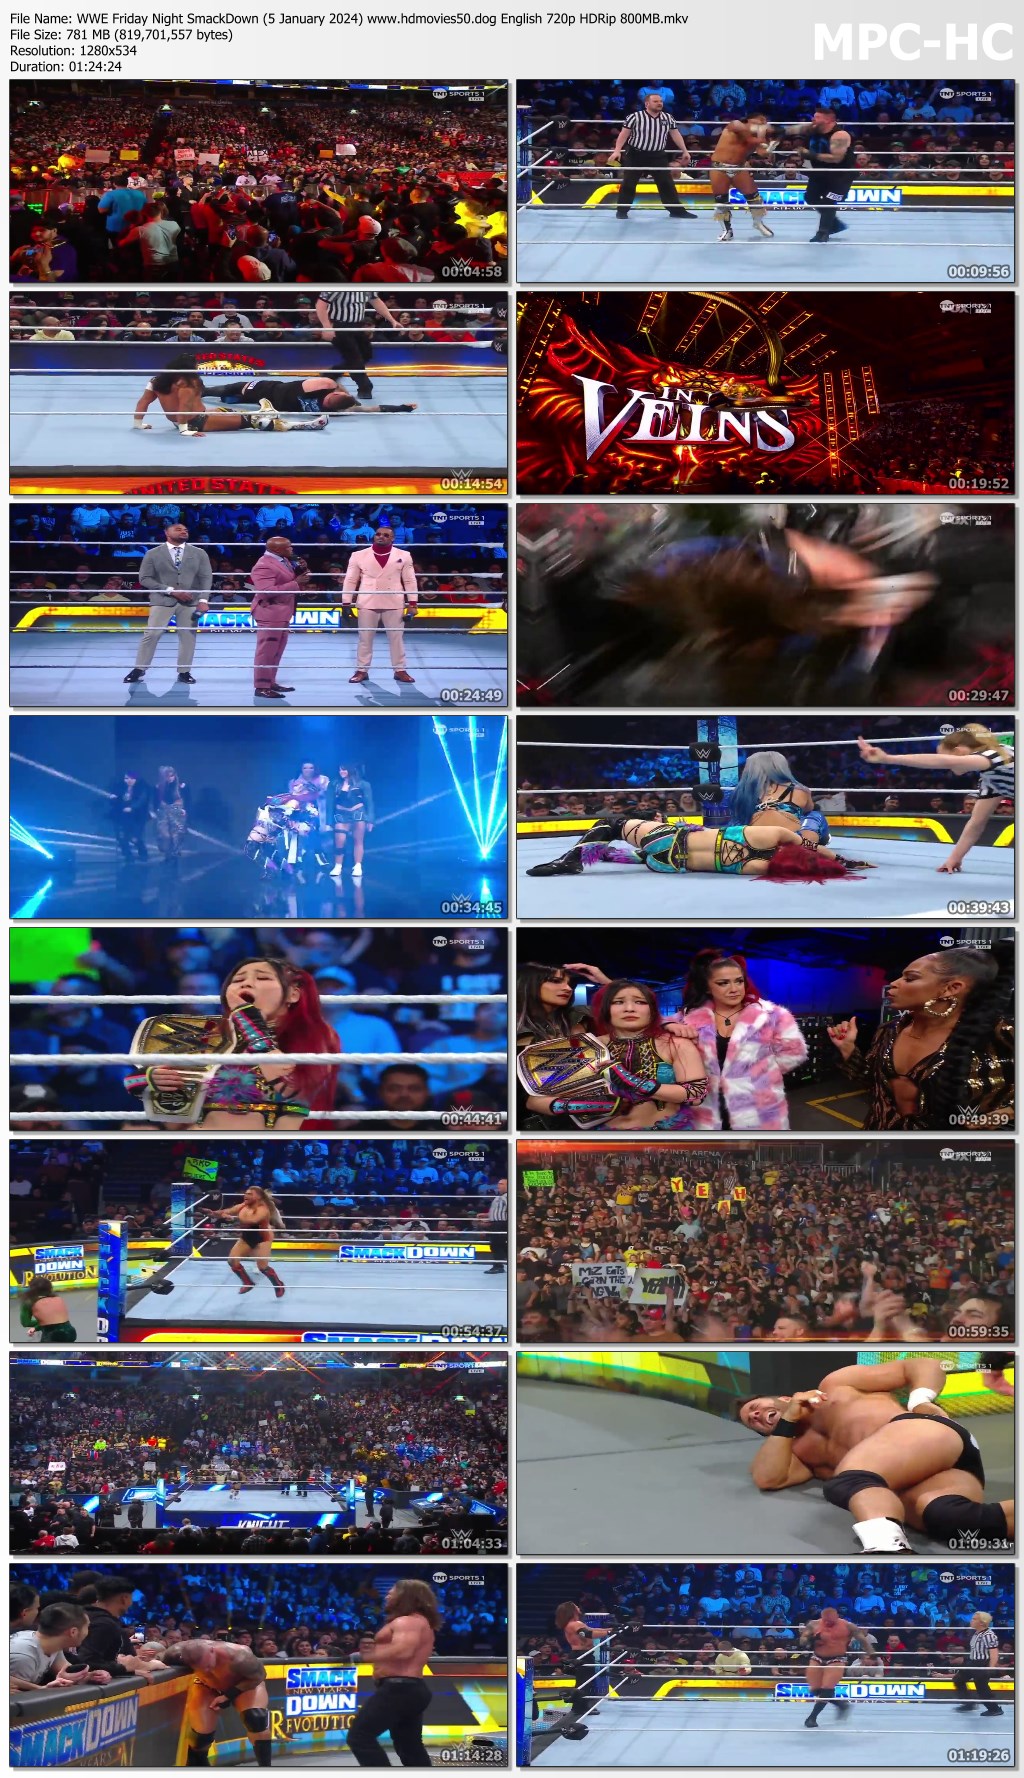 WWE Friday Night SmackDown 5 January 2024 www.hdmovies50.dog English 720p HDRip 800MB.mkv thumbs